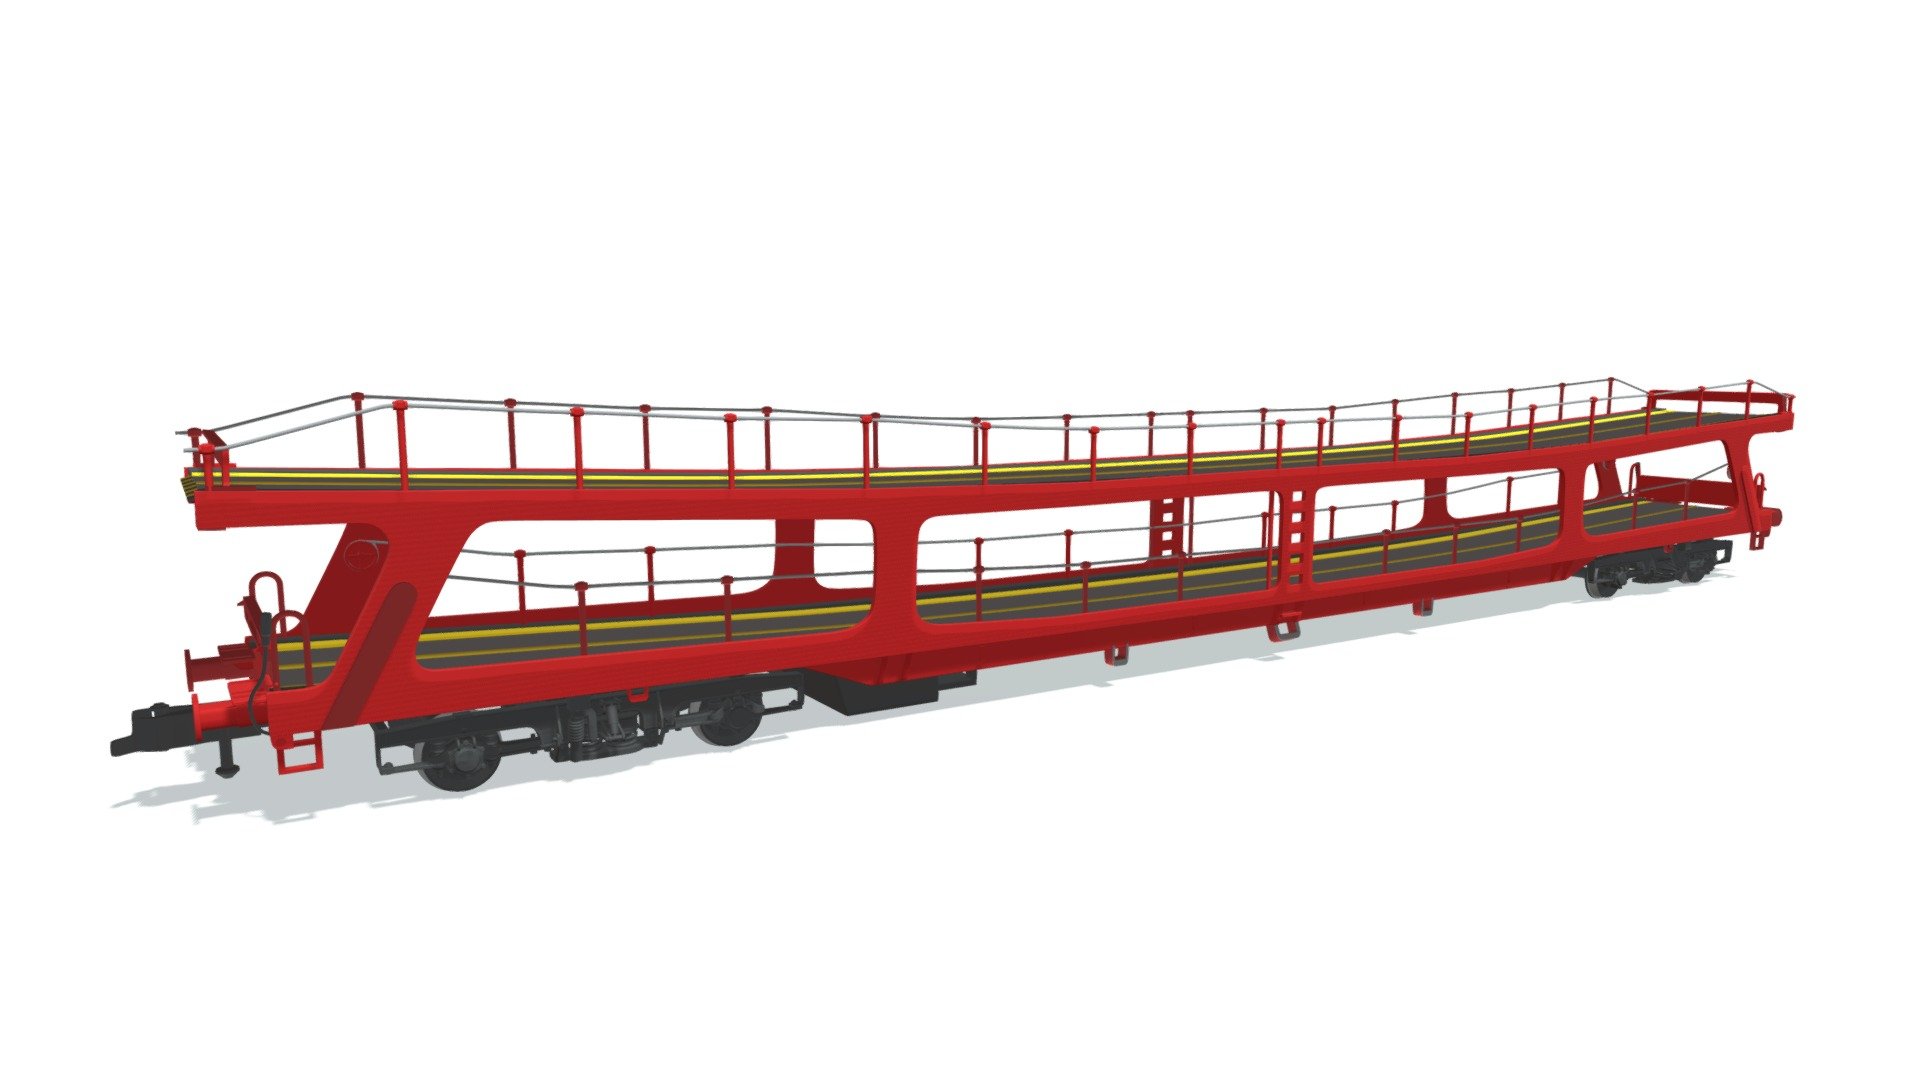 High quality 3d model of car transporter railroad wagon 3d model